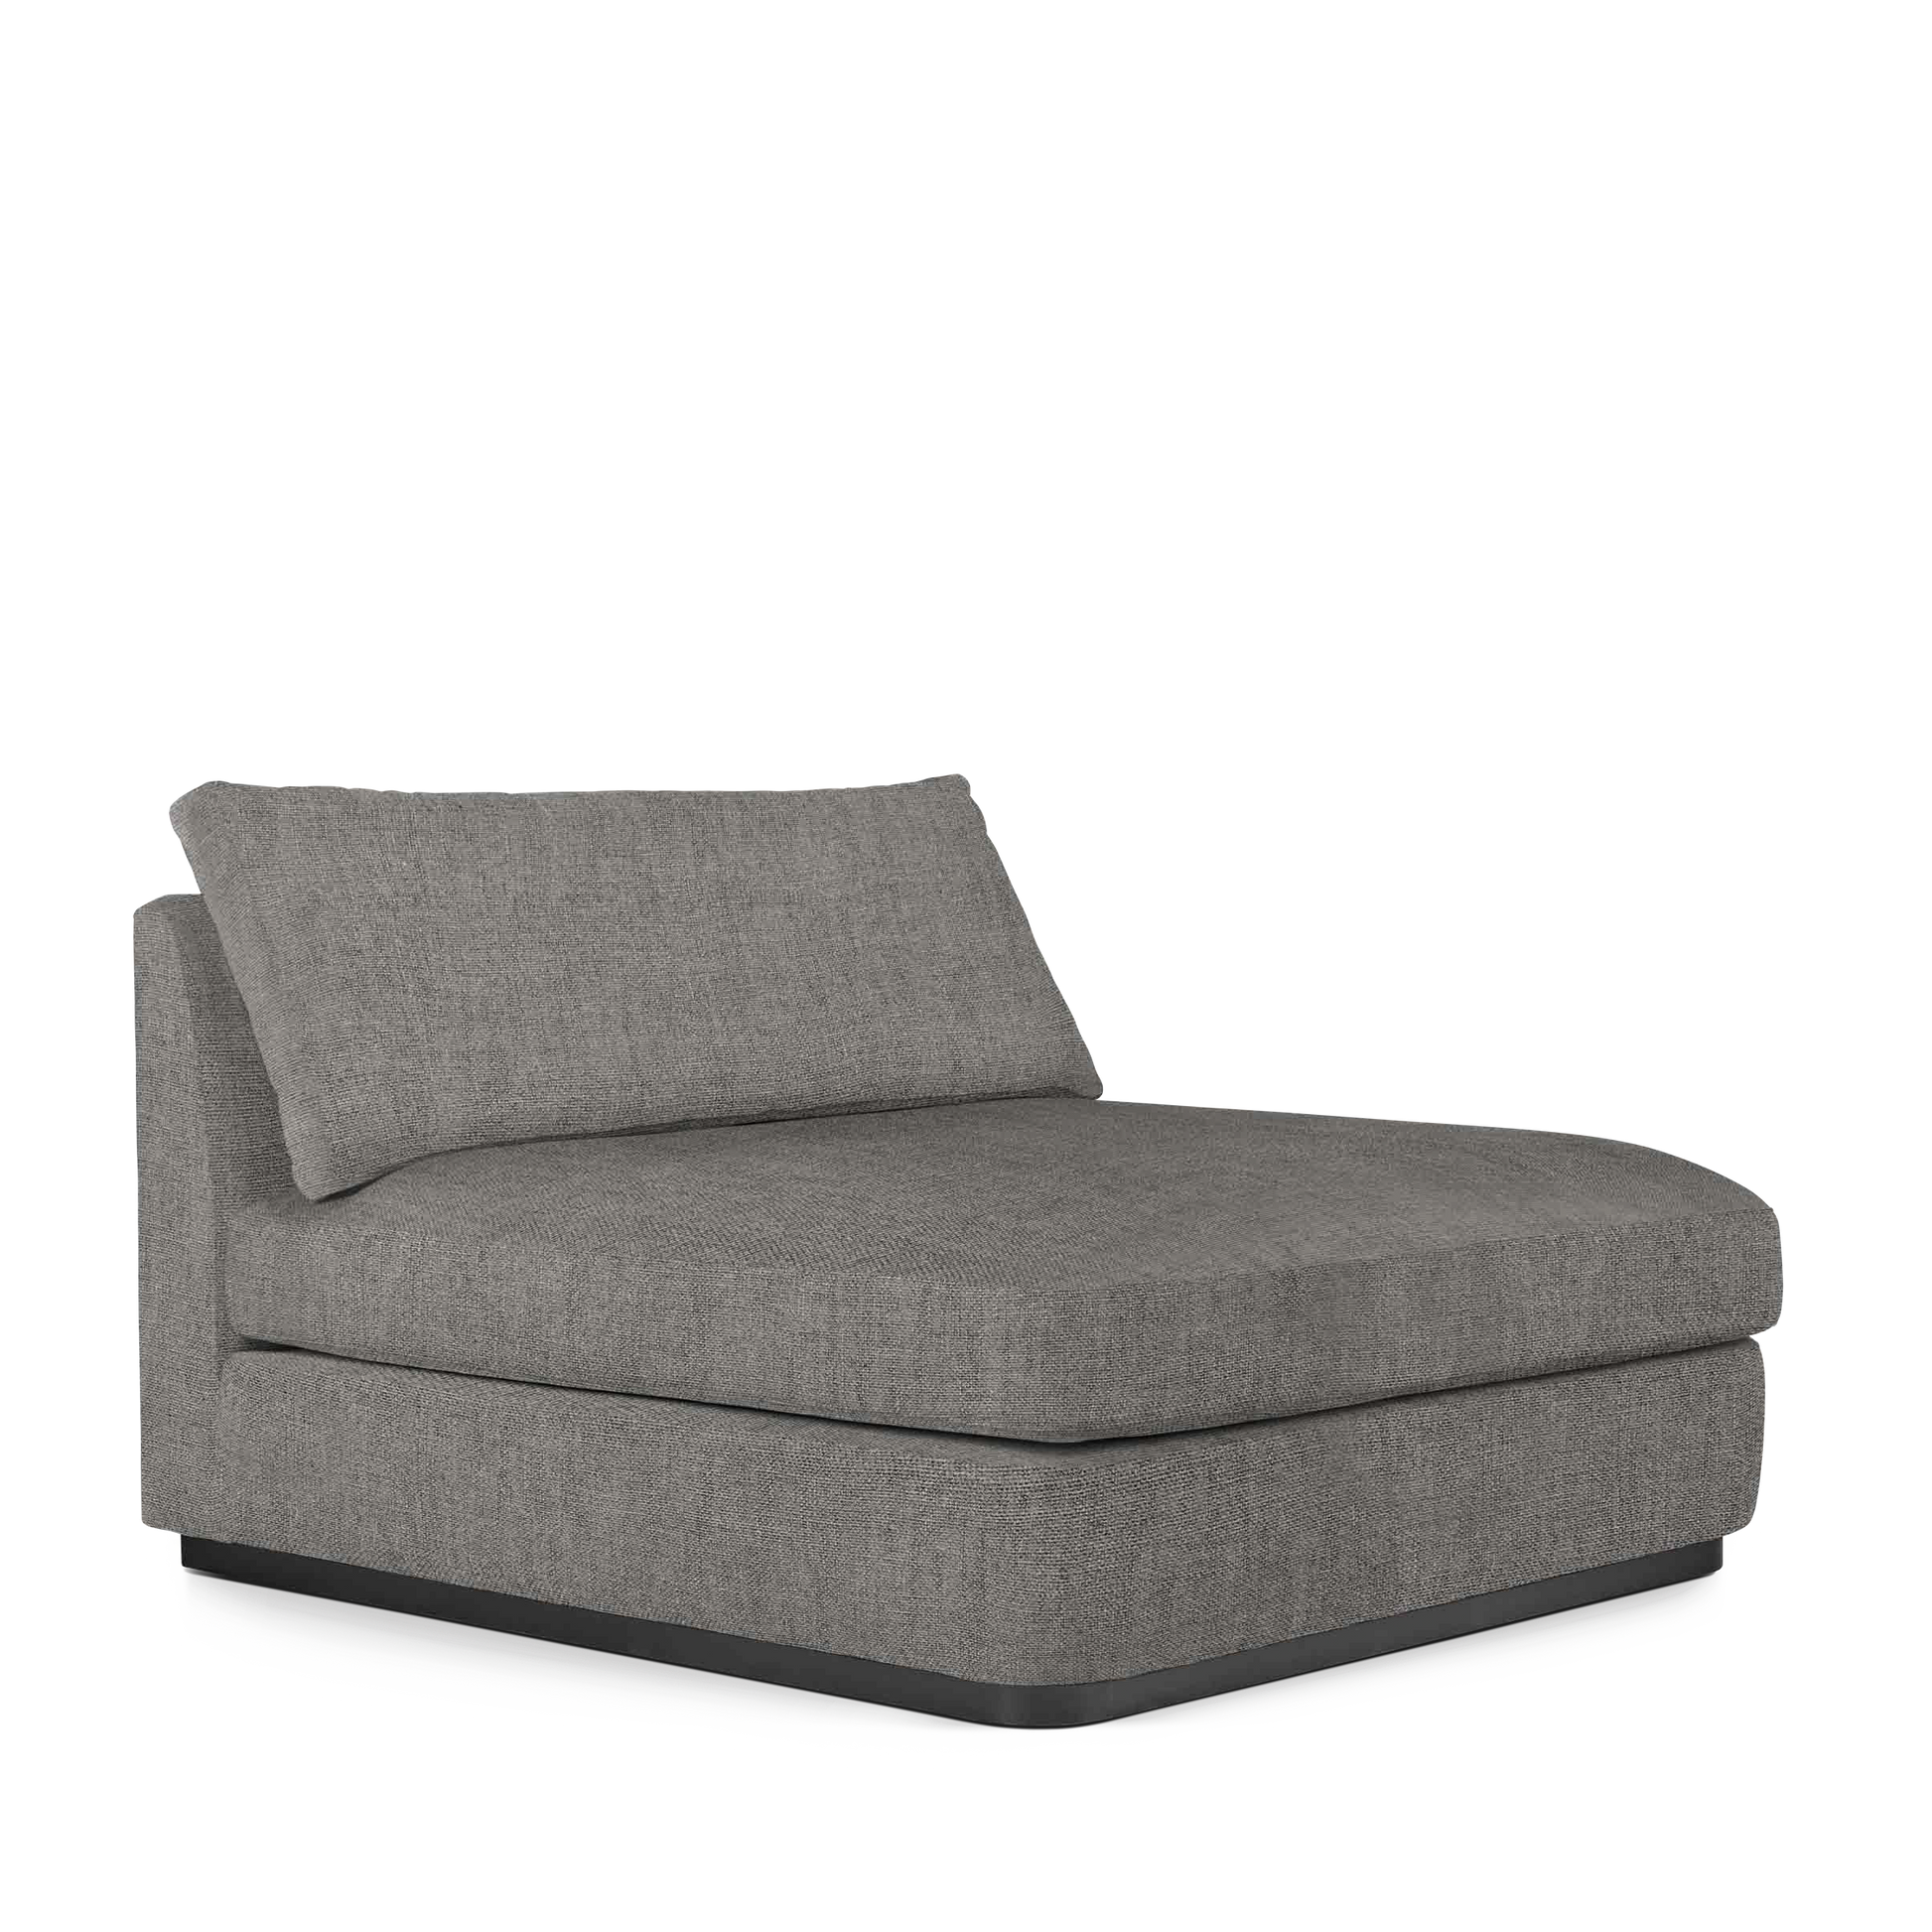 CALMA Lounge Bed with Rocco dark grey textile 